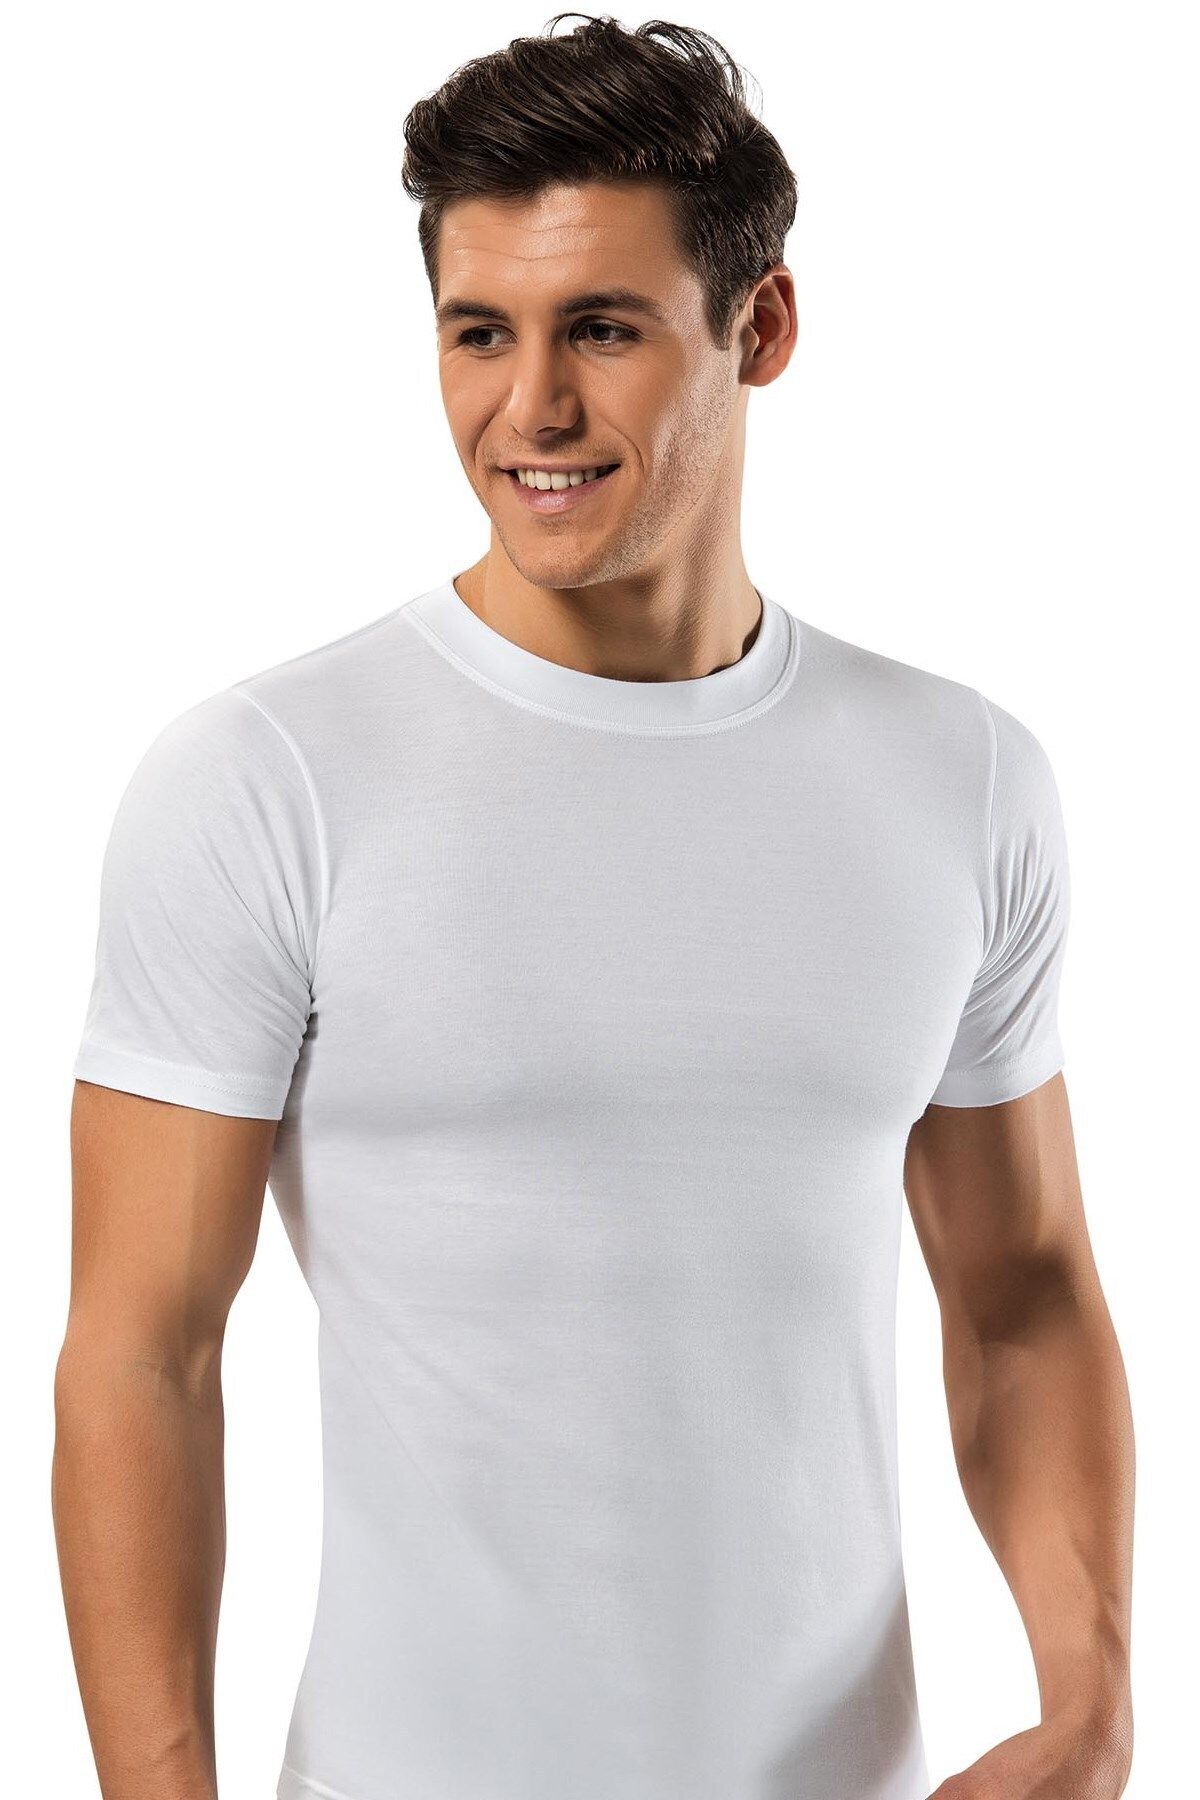 ERDEM İÇ GİYİM Erdem Beyaz Penye Amerikan Yaka T-shirt 1165